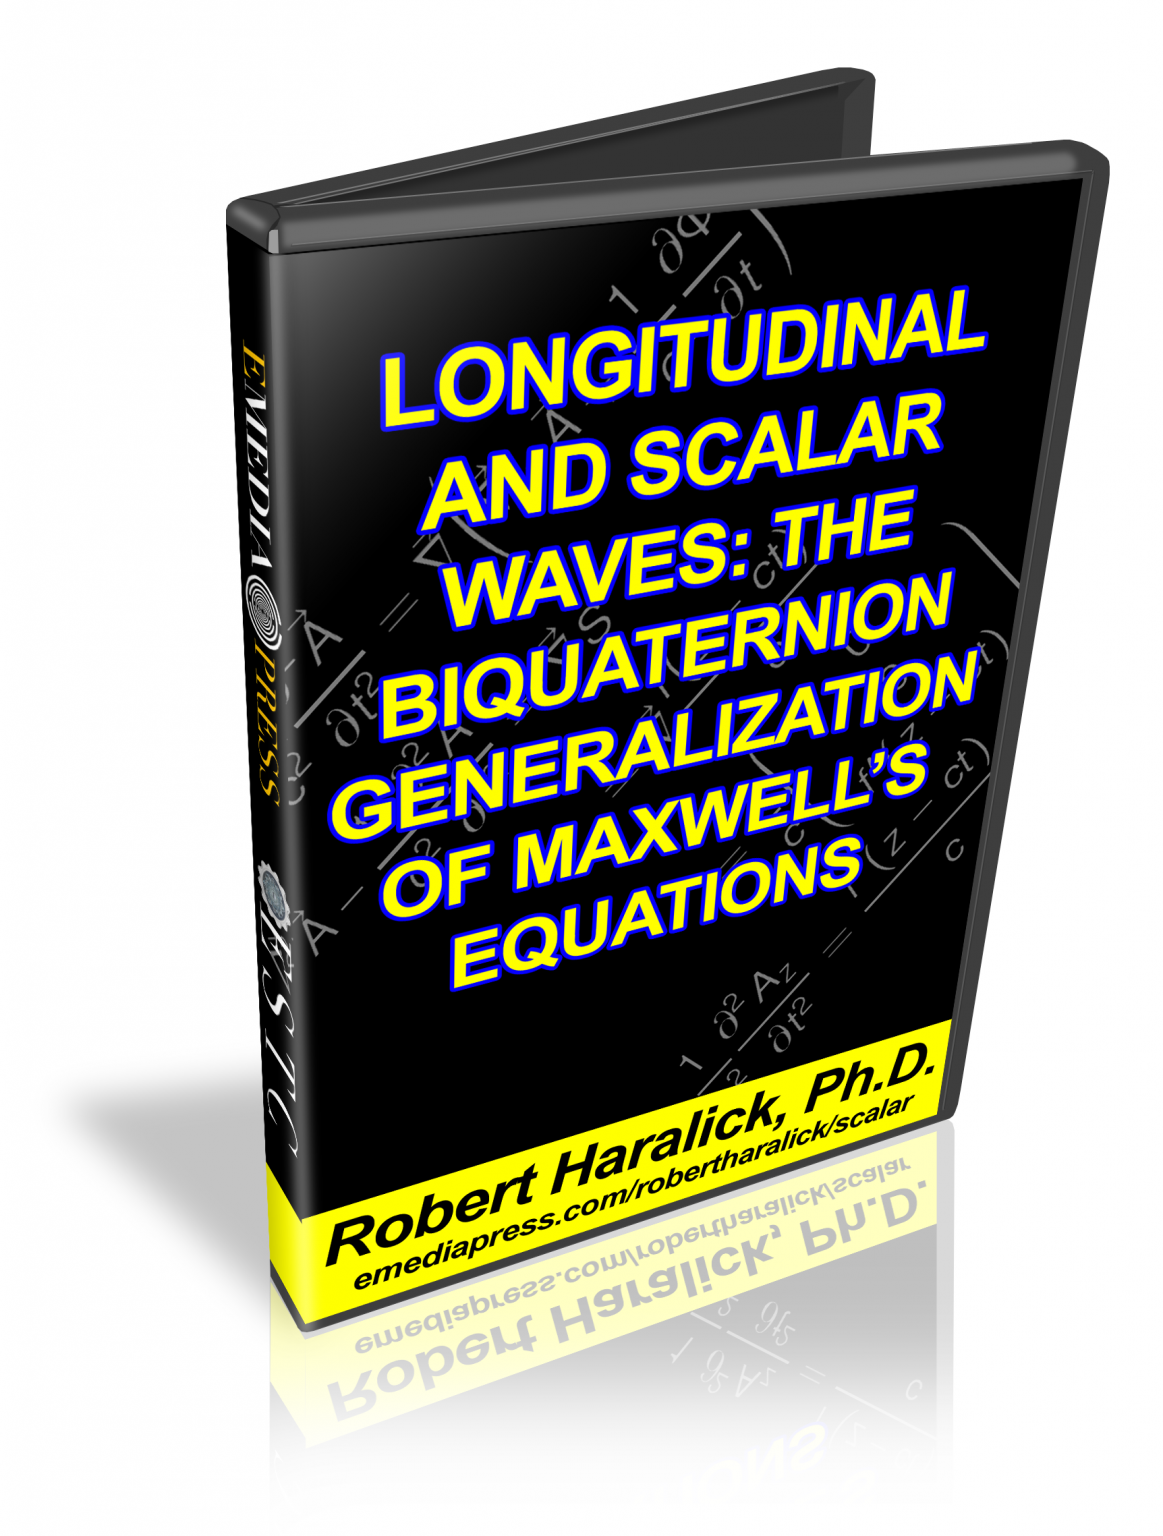 Longitudinal & Scalar Waves: The Biquaternion Generalization Of Maxwell's Equations